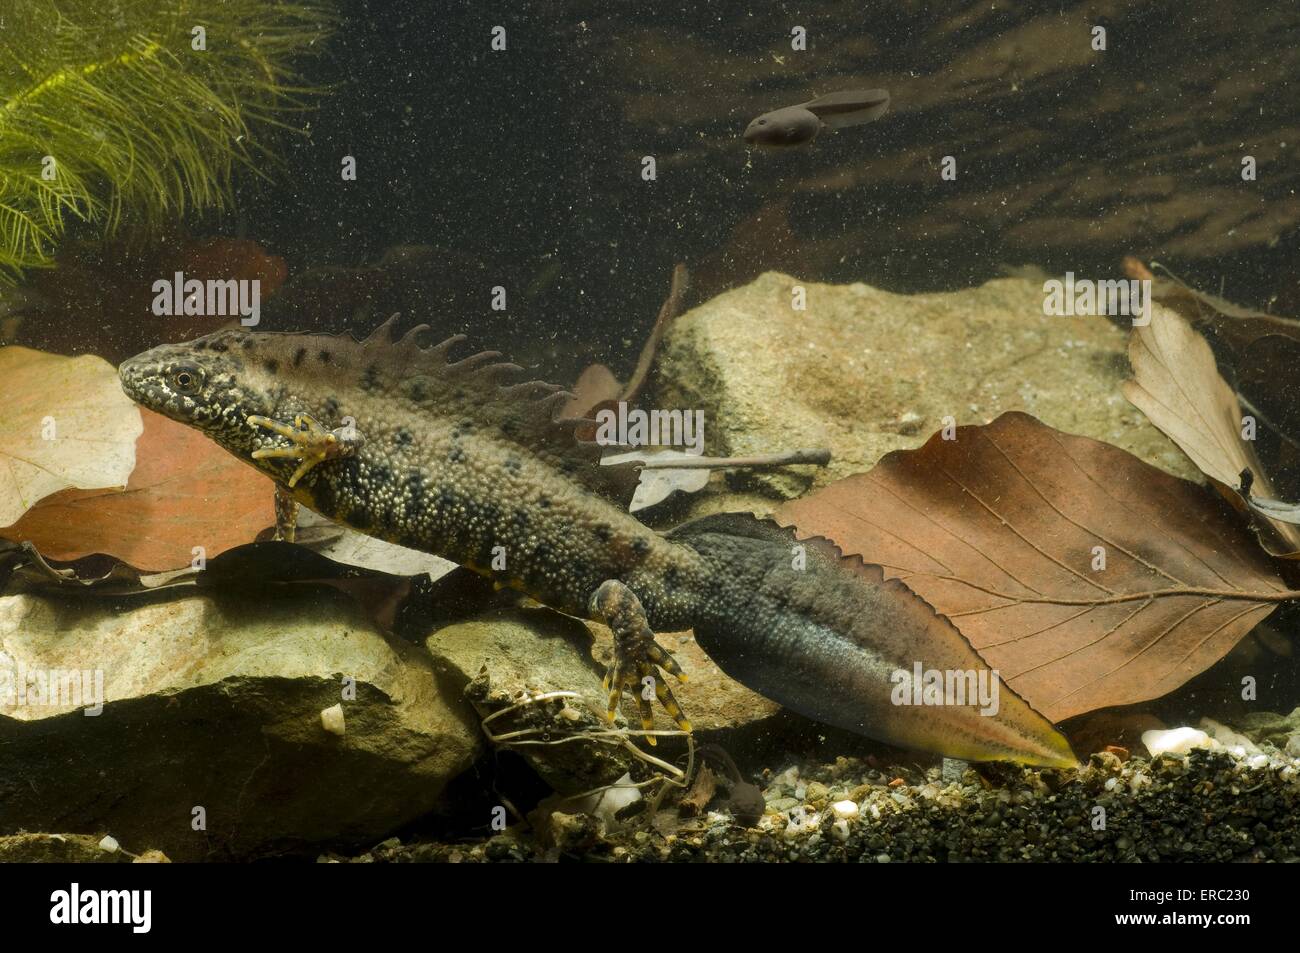 Warty newt Foto Stock